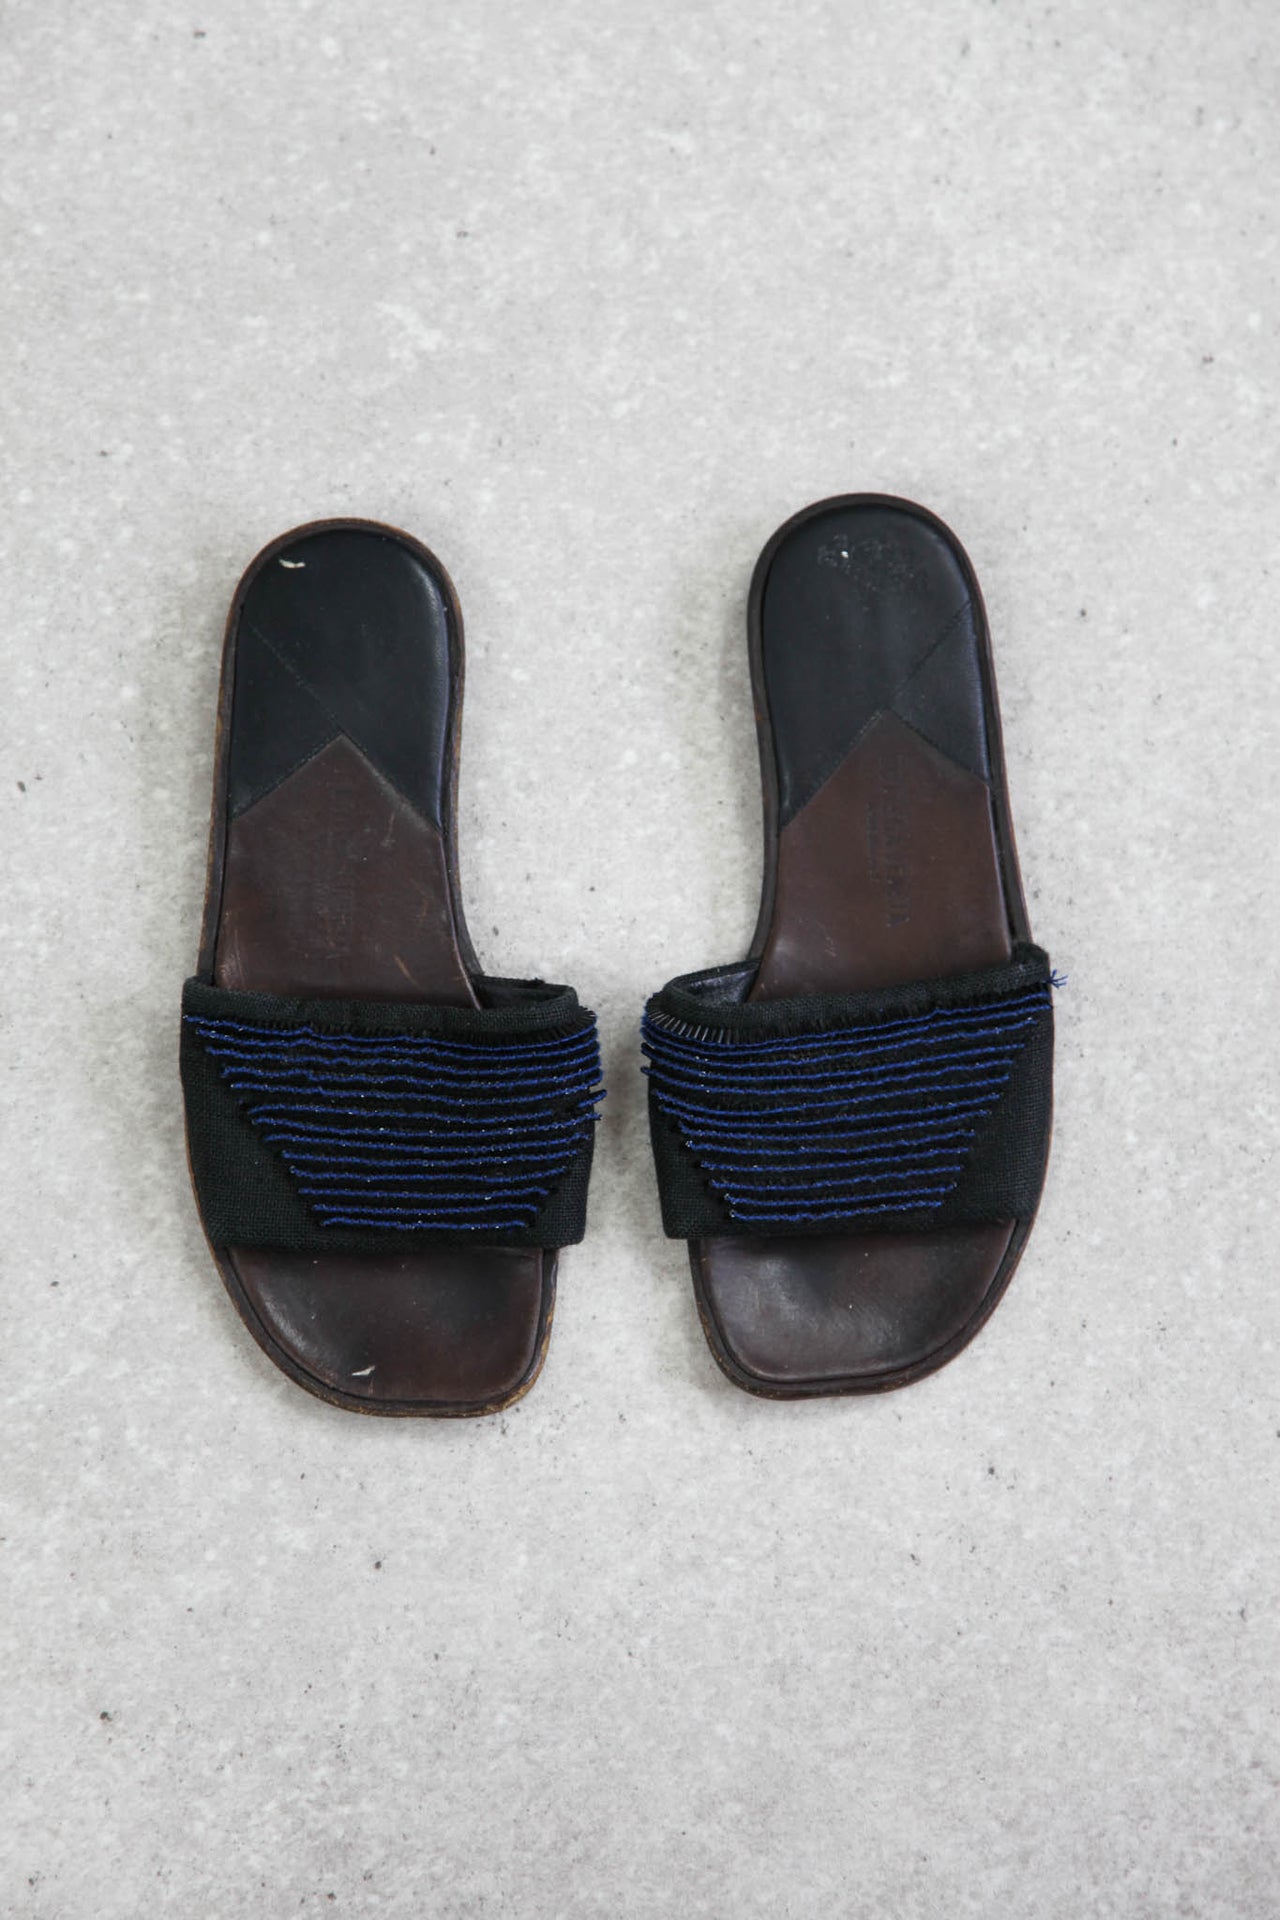 Bottega Veneta Black & Blue Sandals (EU37/ UK4/ US 6.5)